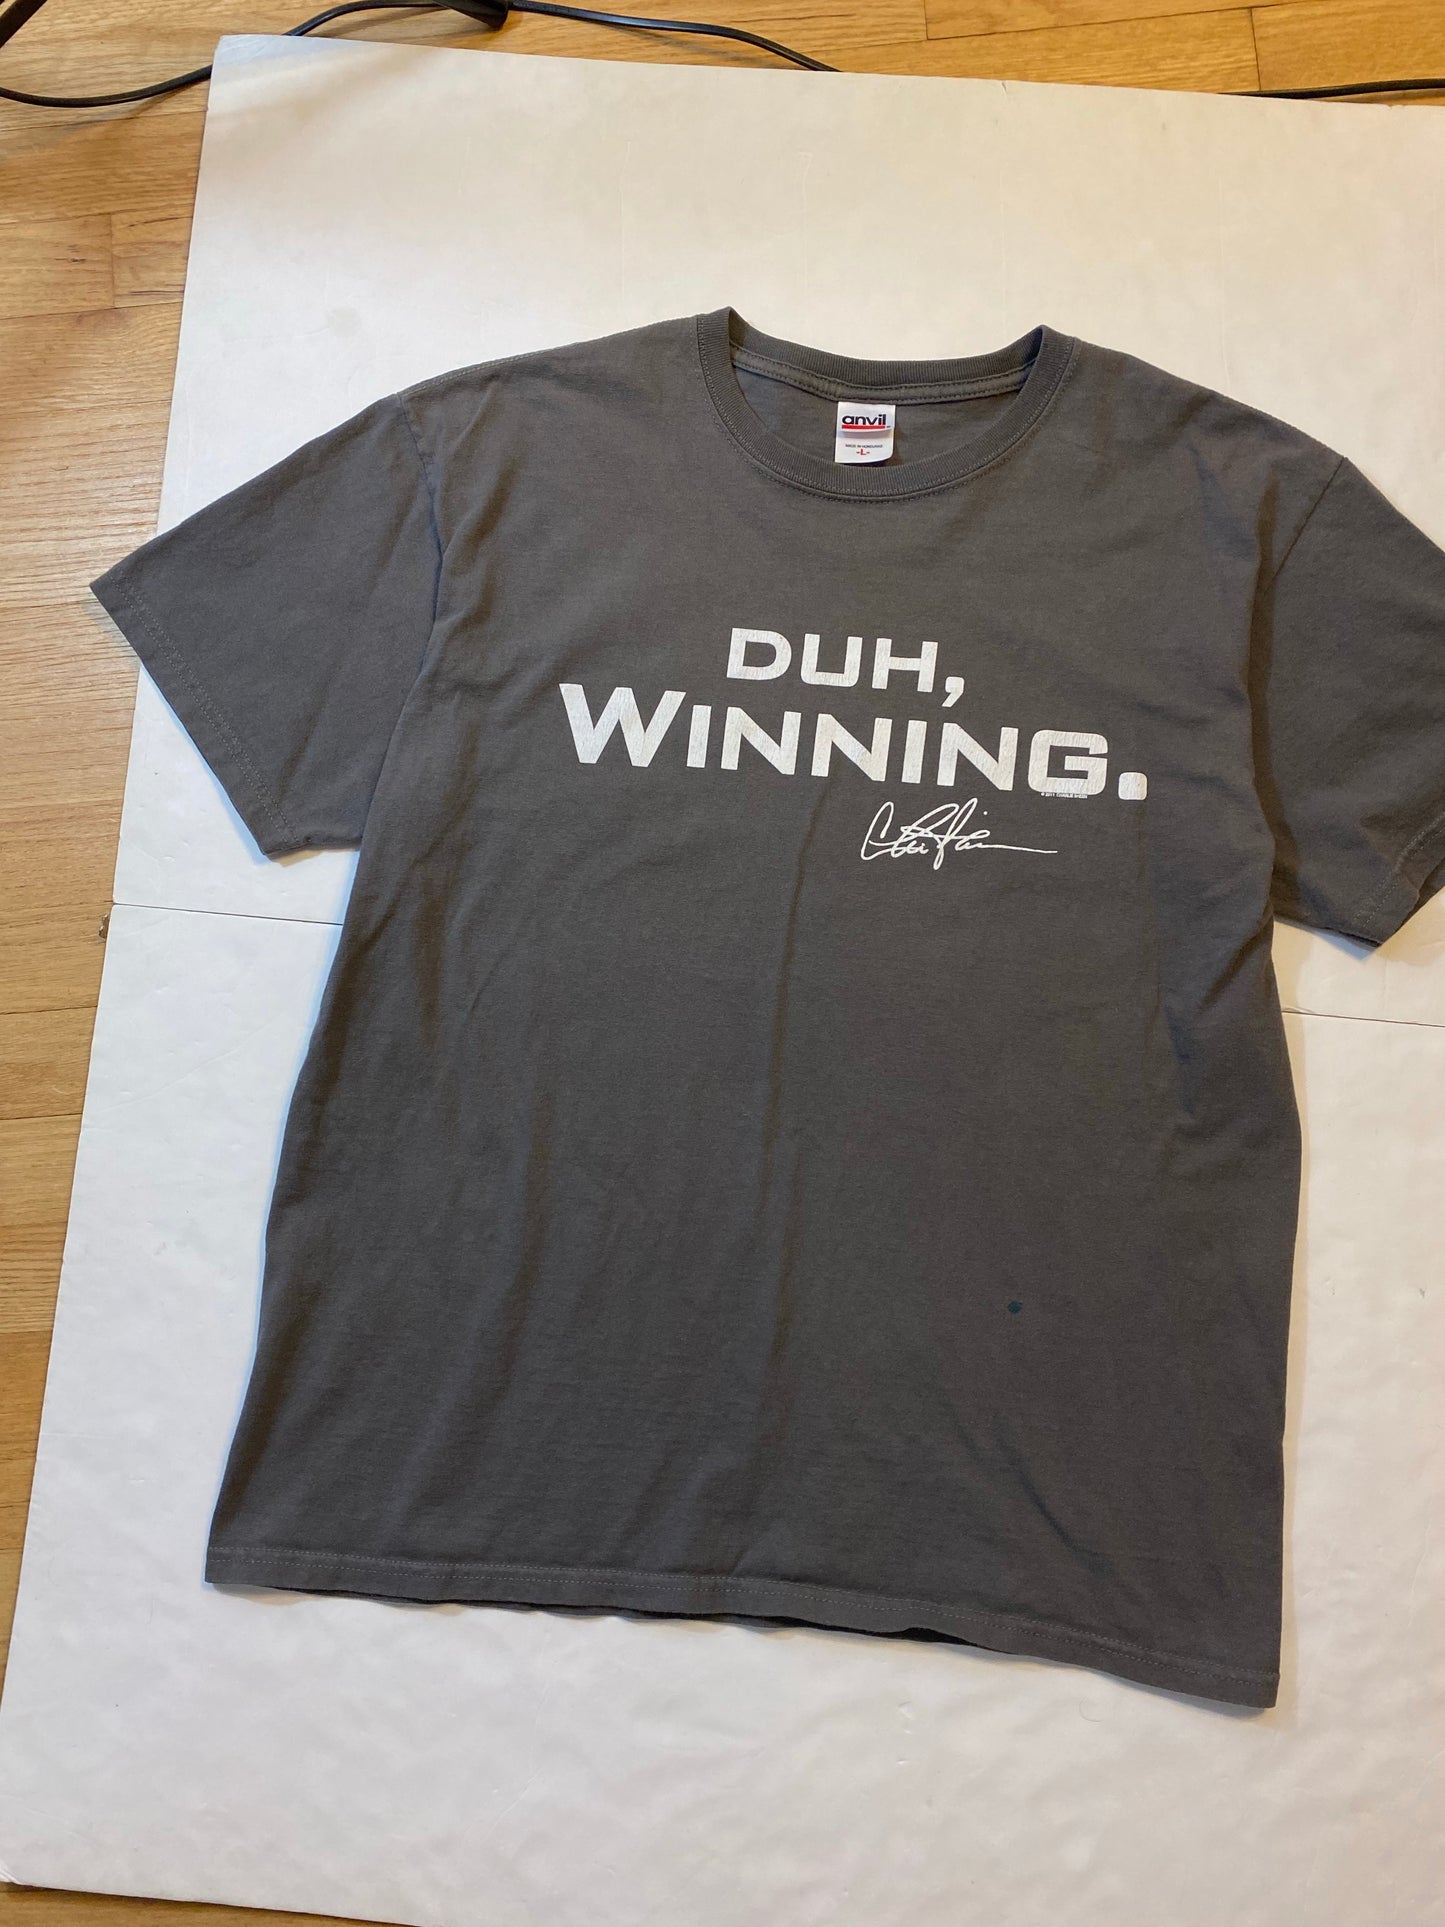 2011 Charlie Sheen “Duh, Winning” T-Shirt